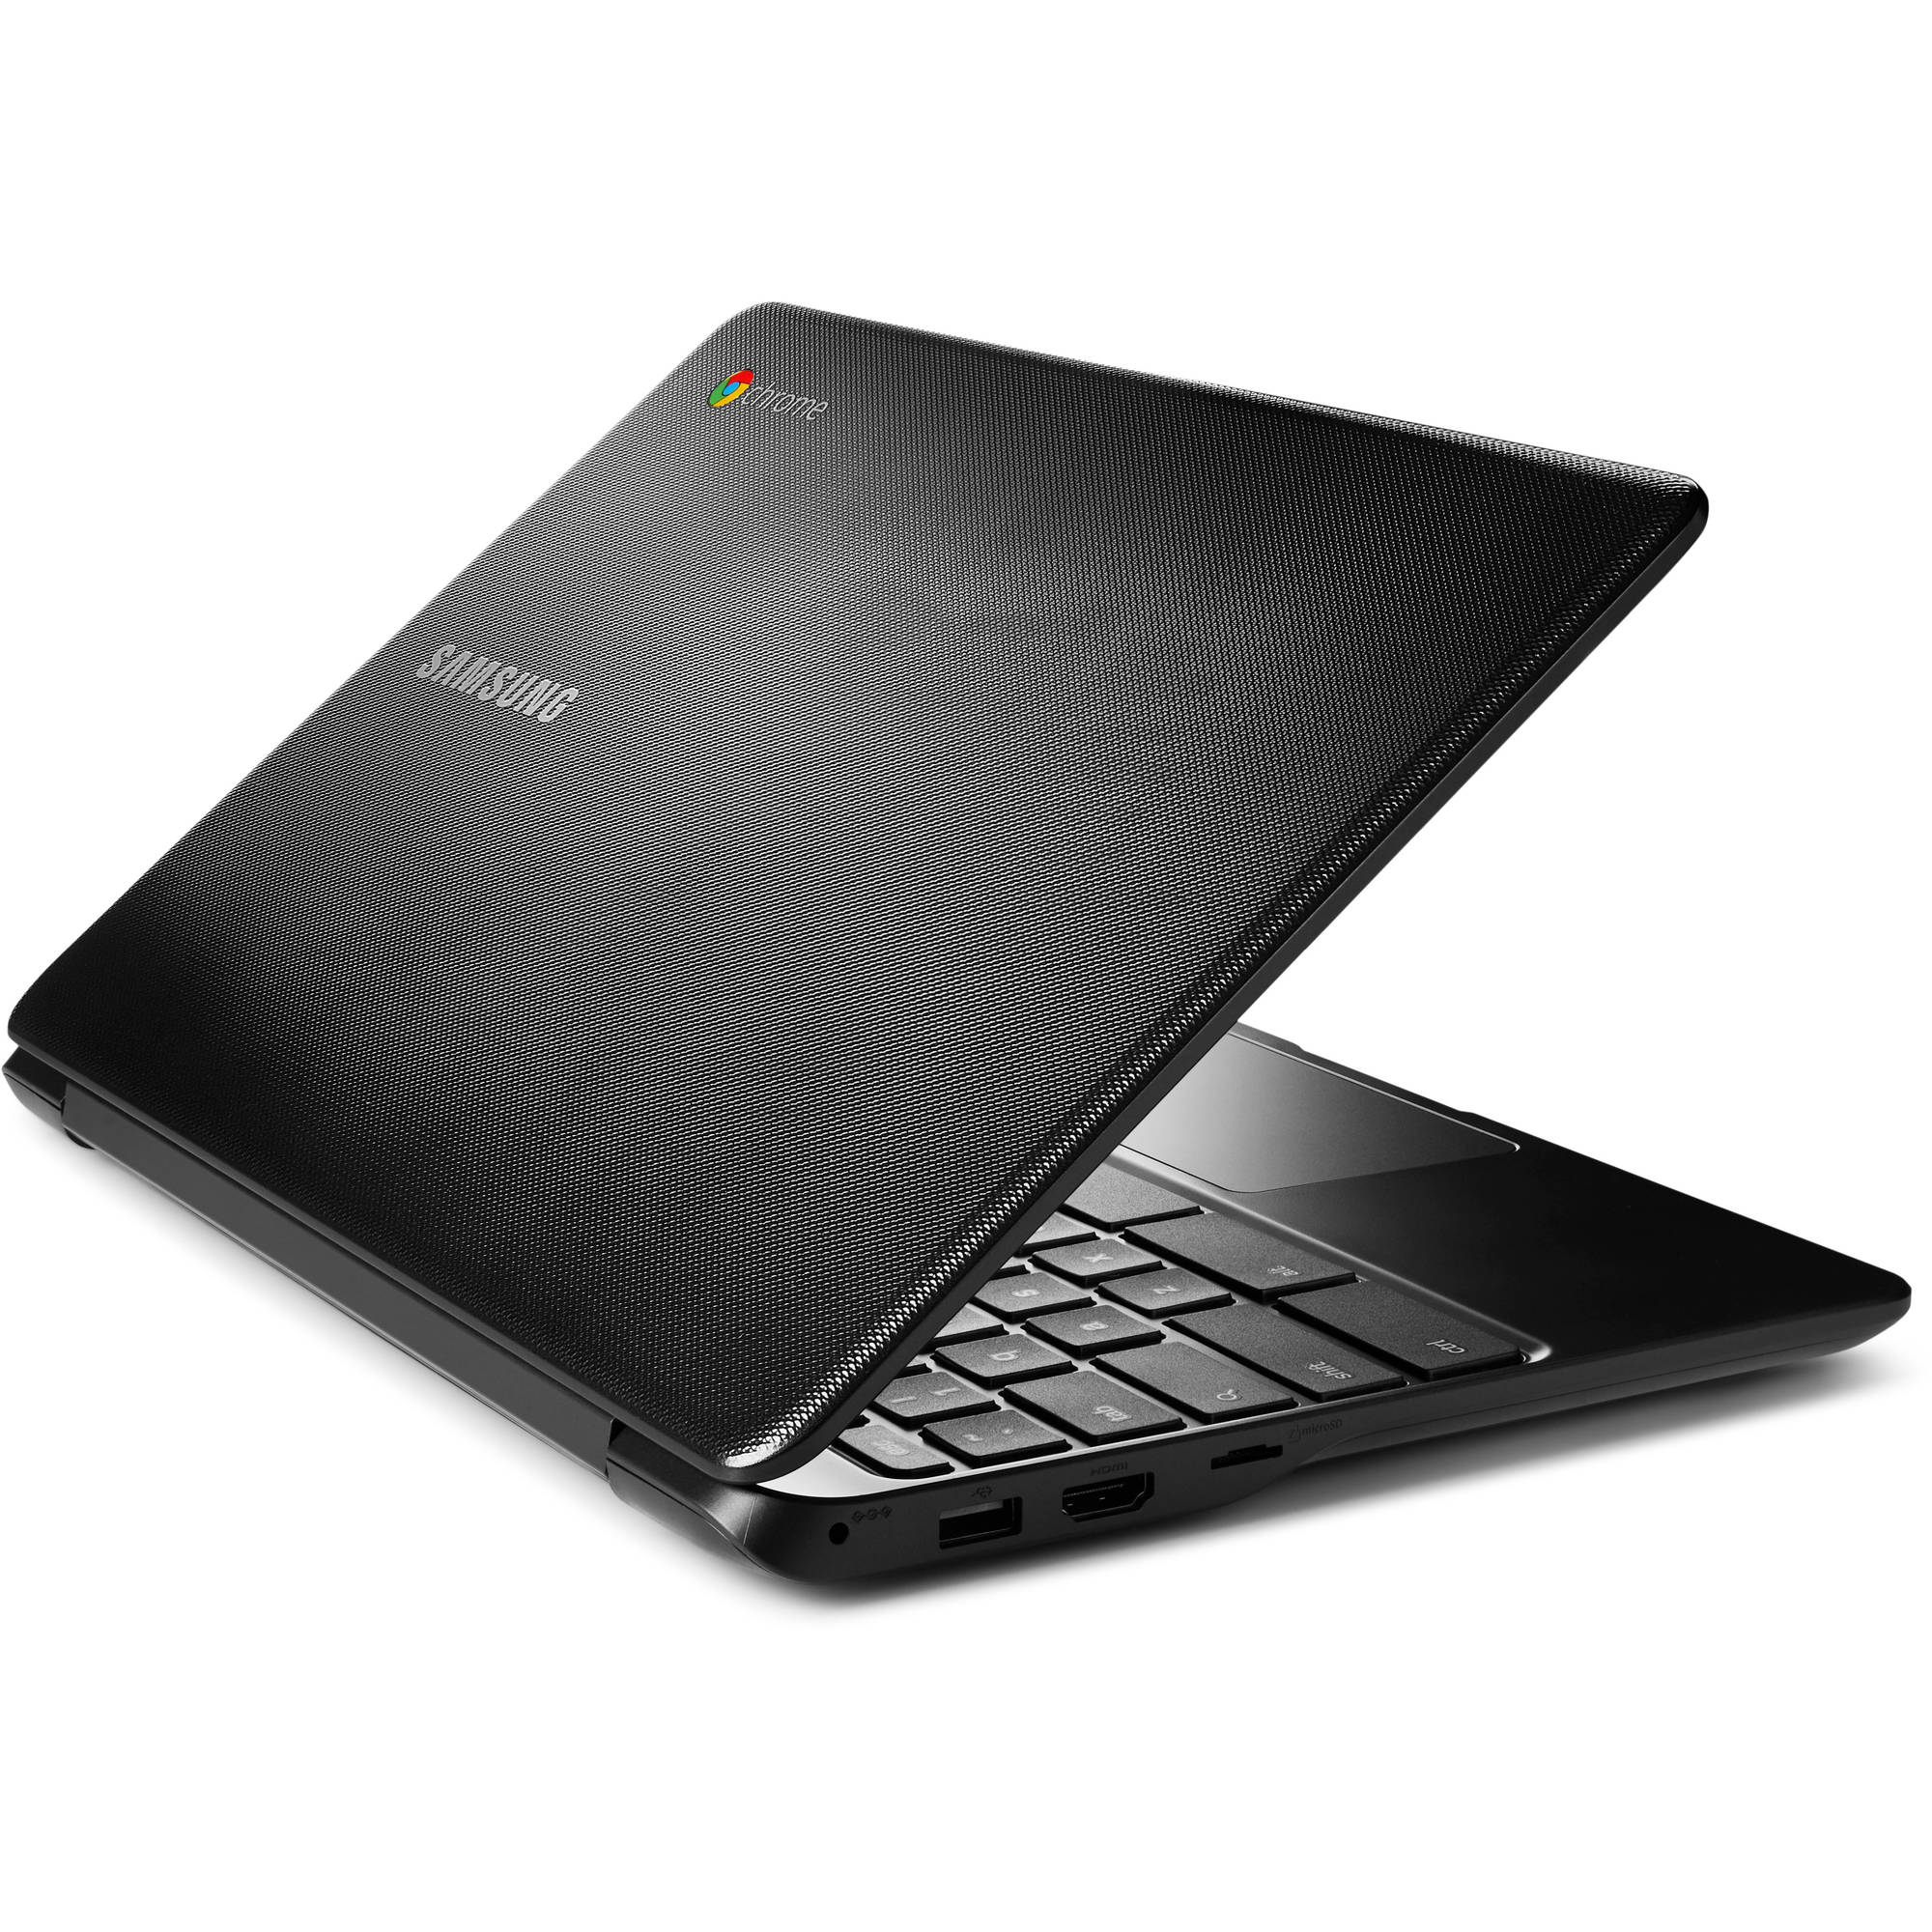 SAMSUNG 11.6" Chromebook 3, Intel Celeron N3060, 4GB RAM, 16GB eMMC, Metallic Black - XE500C13-K04US (Google Classroom Ready) - image 2 of 9